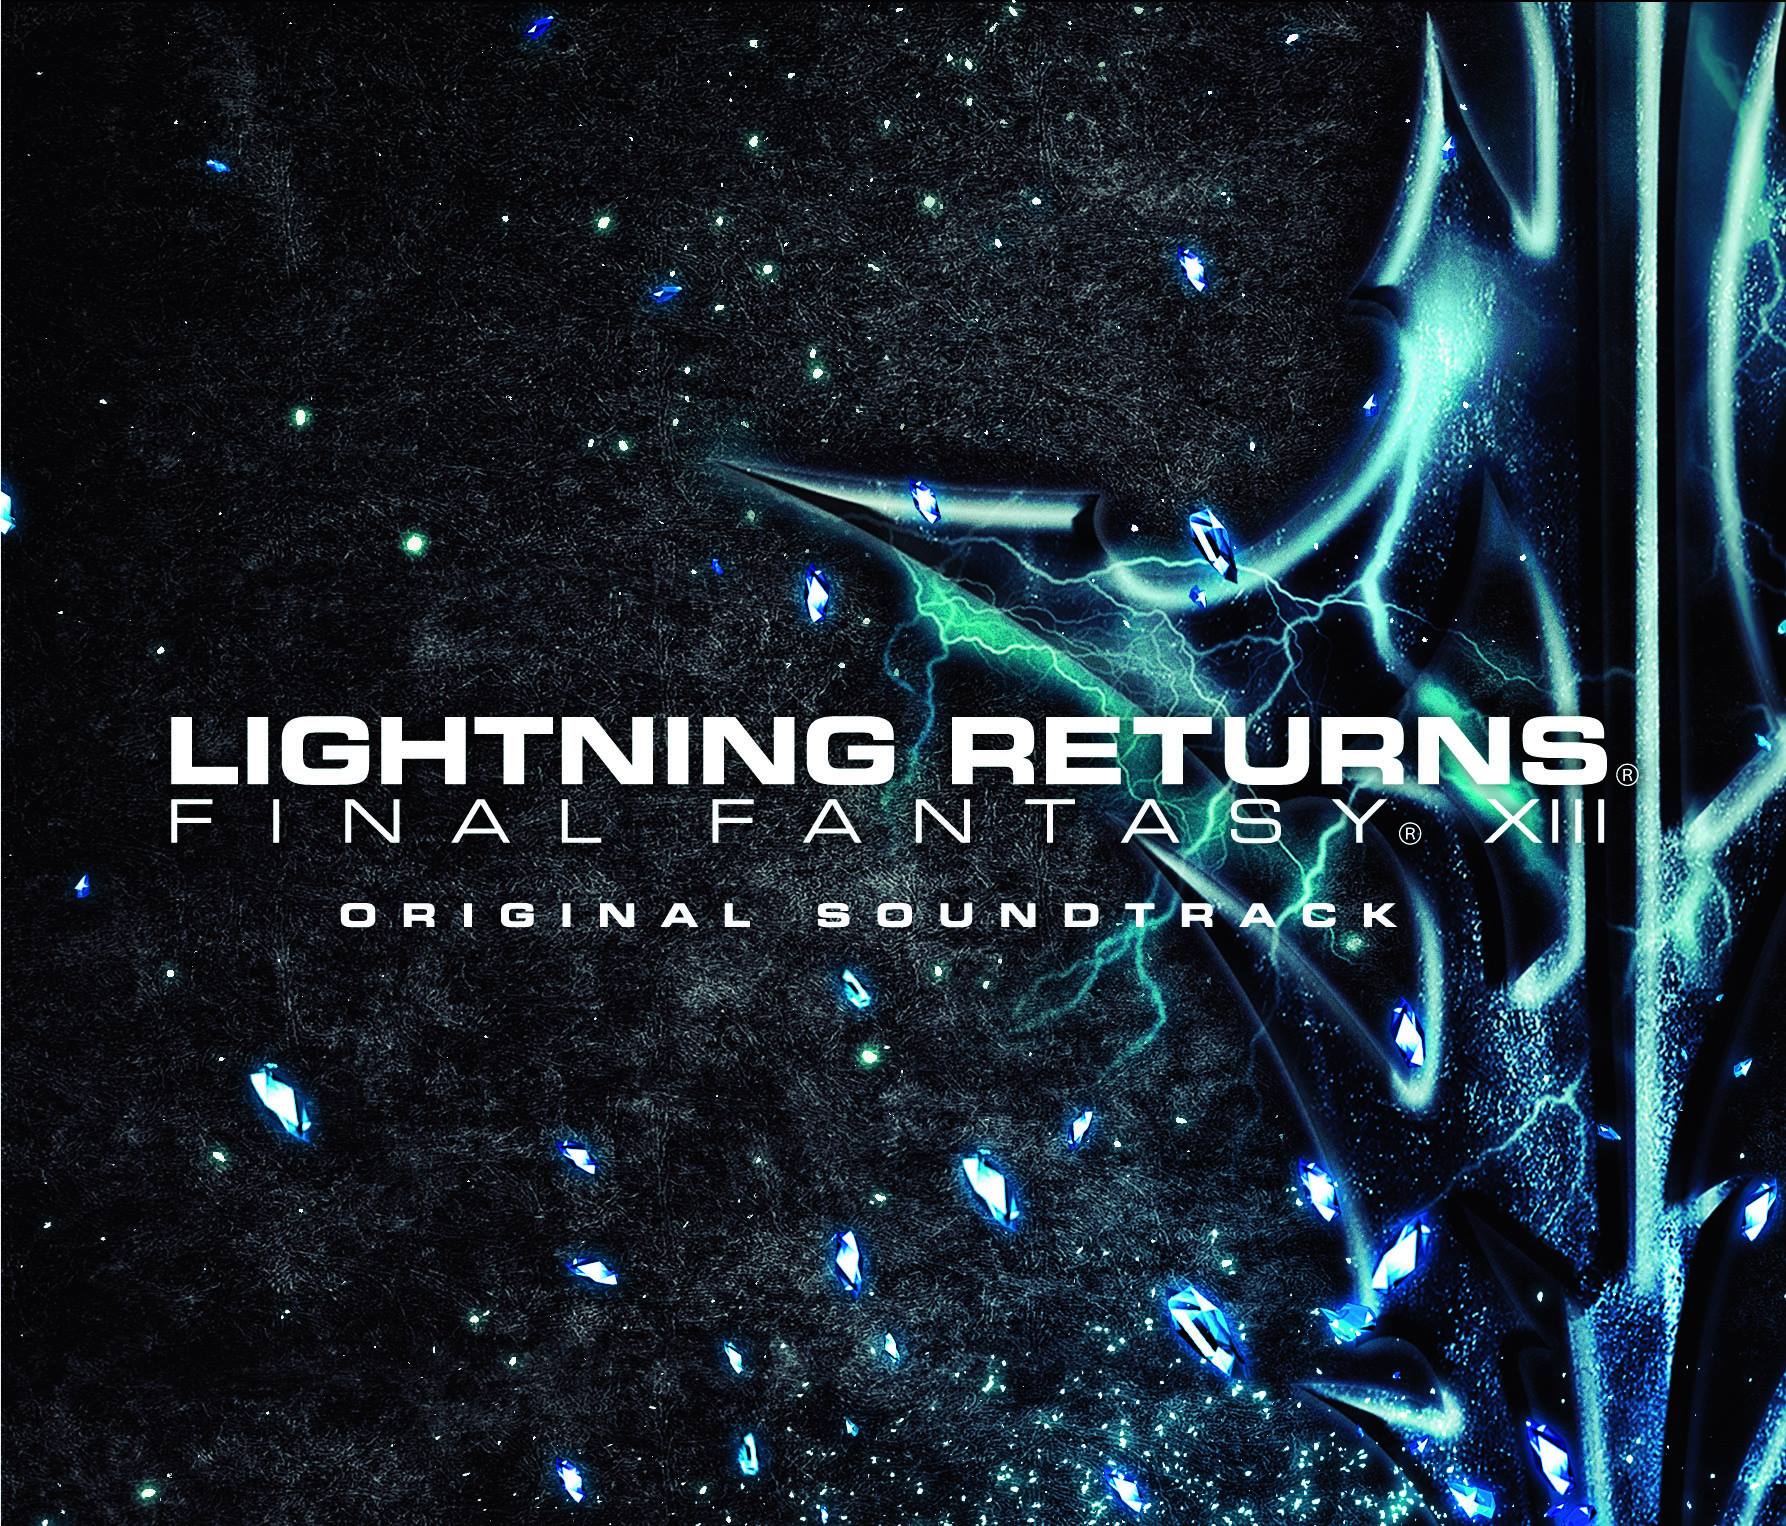 lightning returns final fantasy xiii ost free download